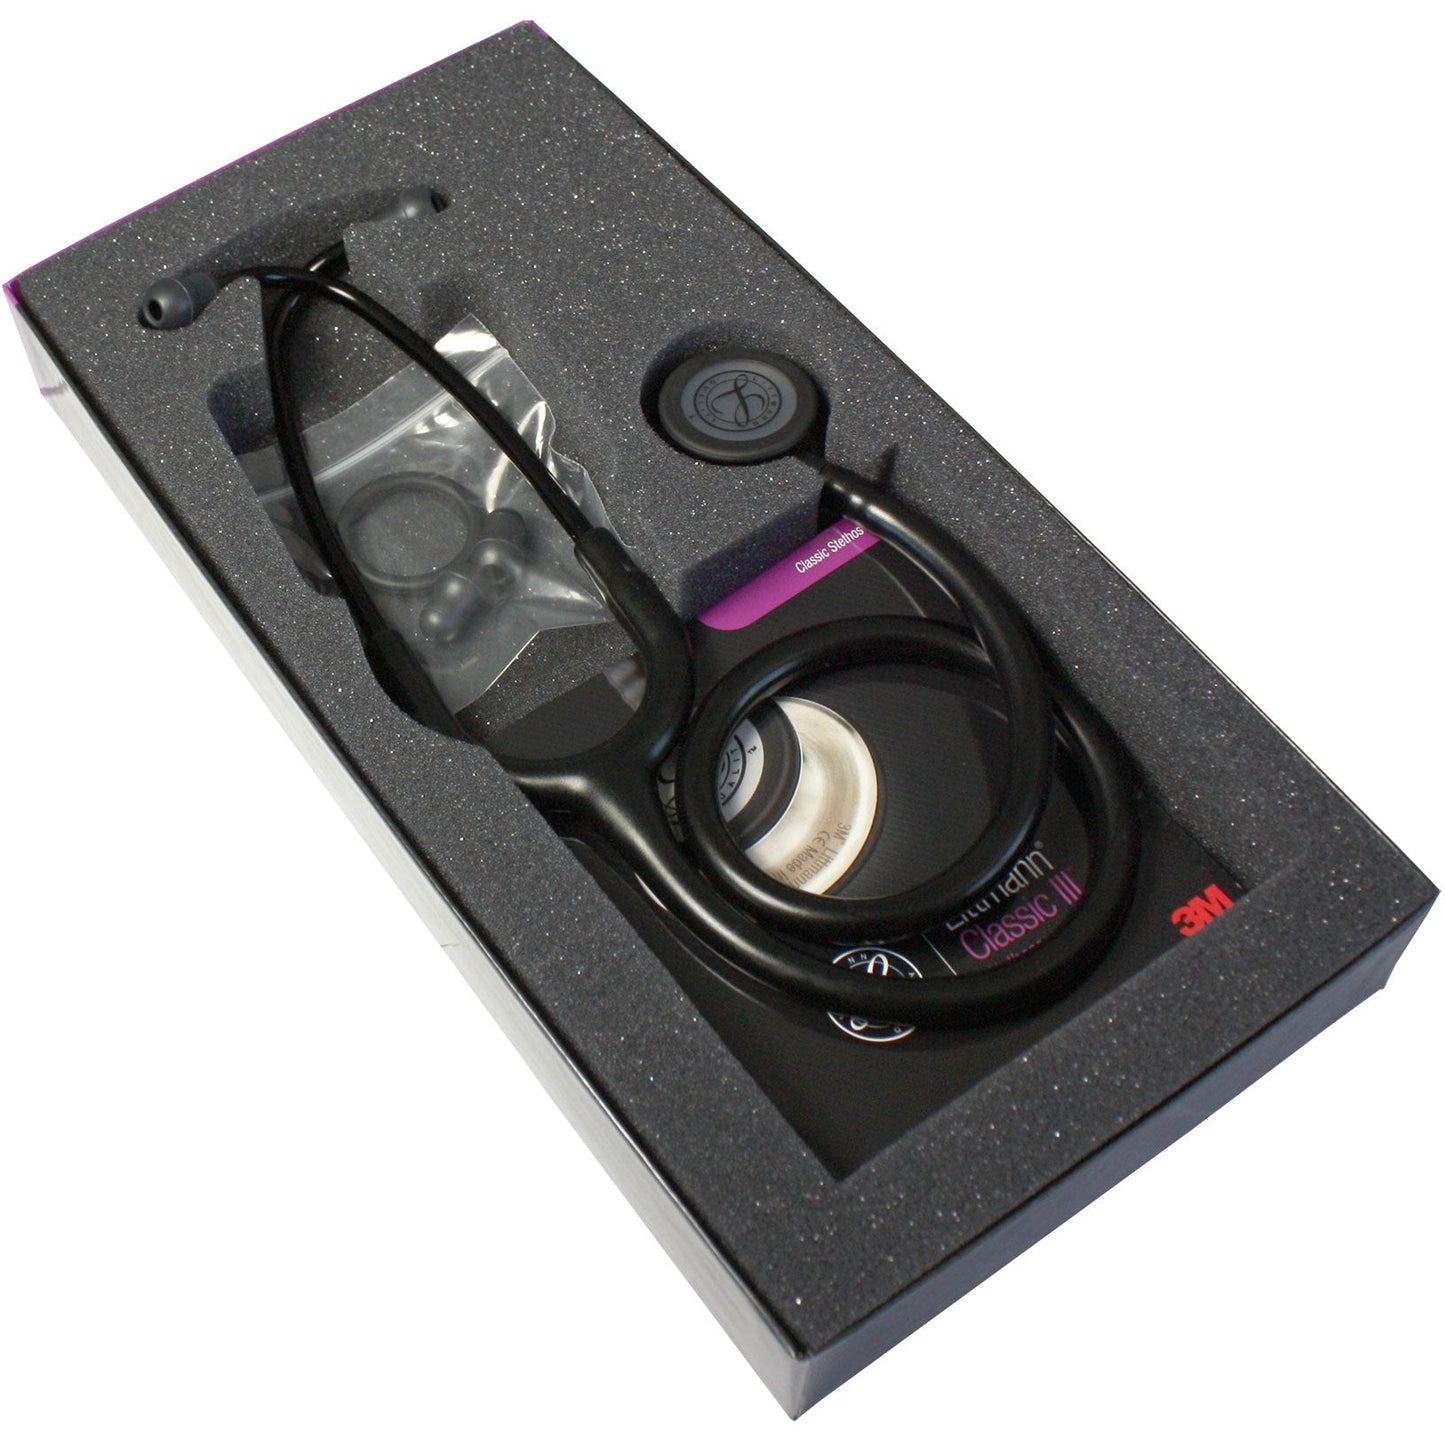 Littmann Classic III Stethoscope: All Black 5803 3M Littmann